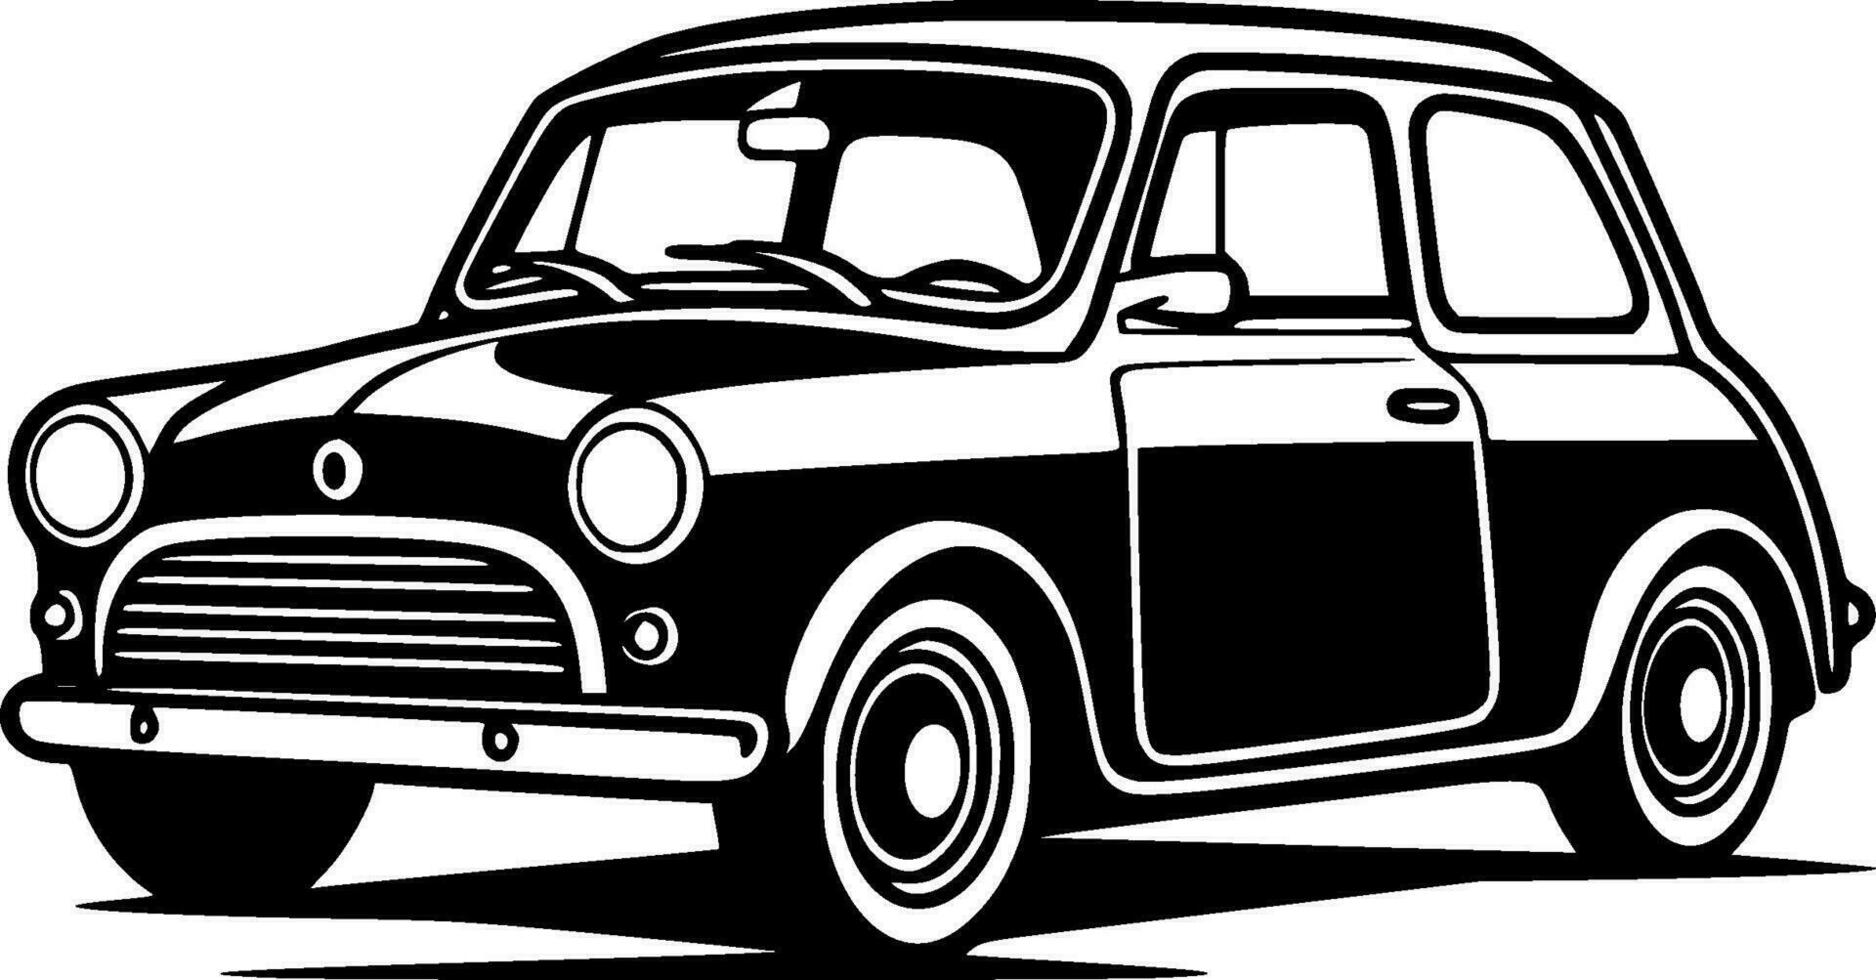 Car, Black and White Vector illustration